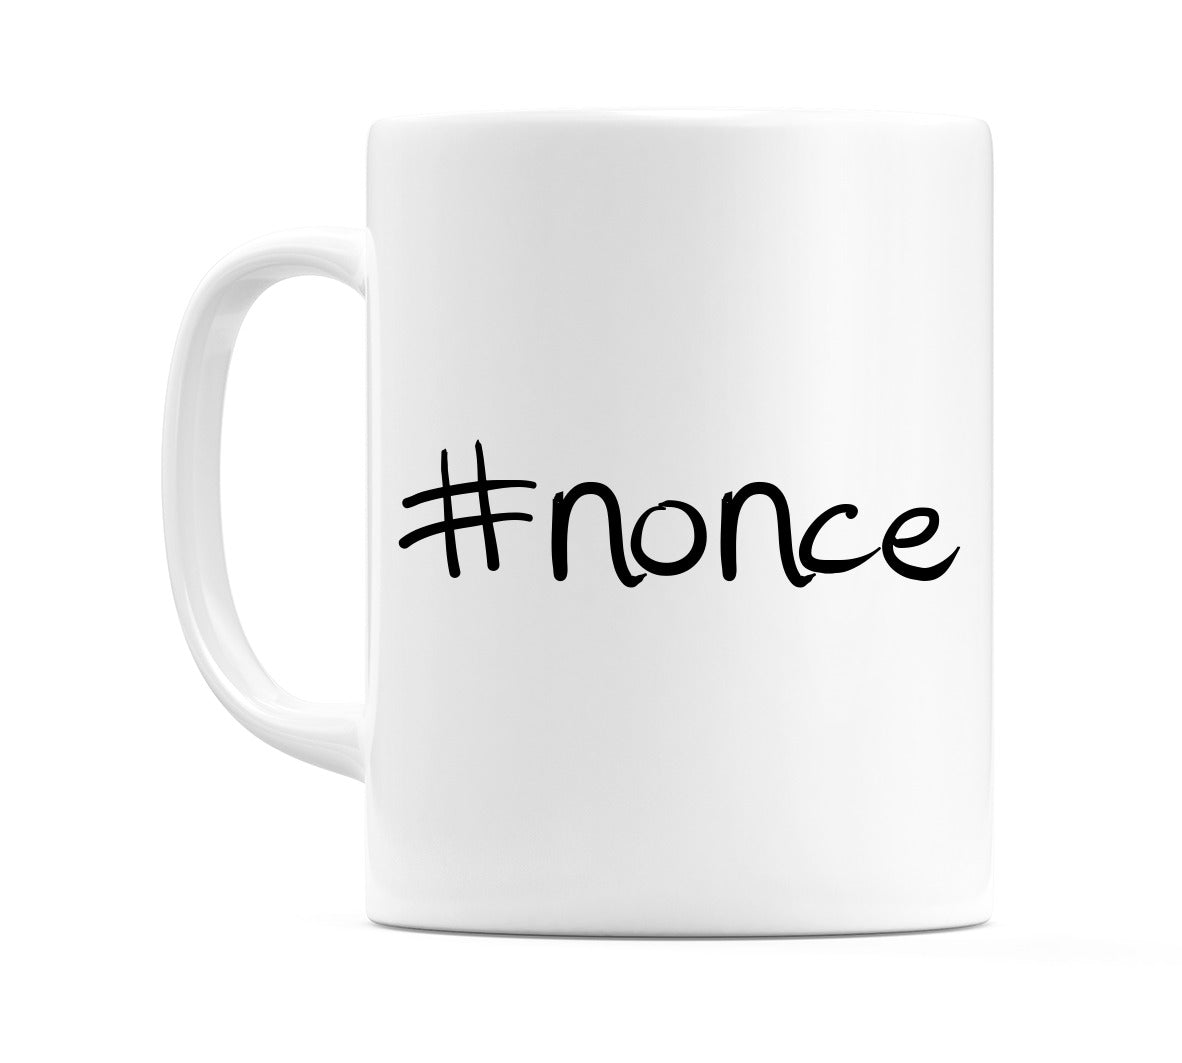 #nonce Mug